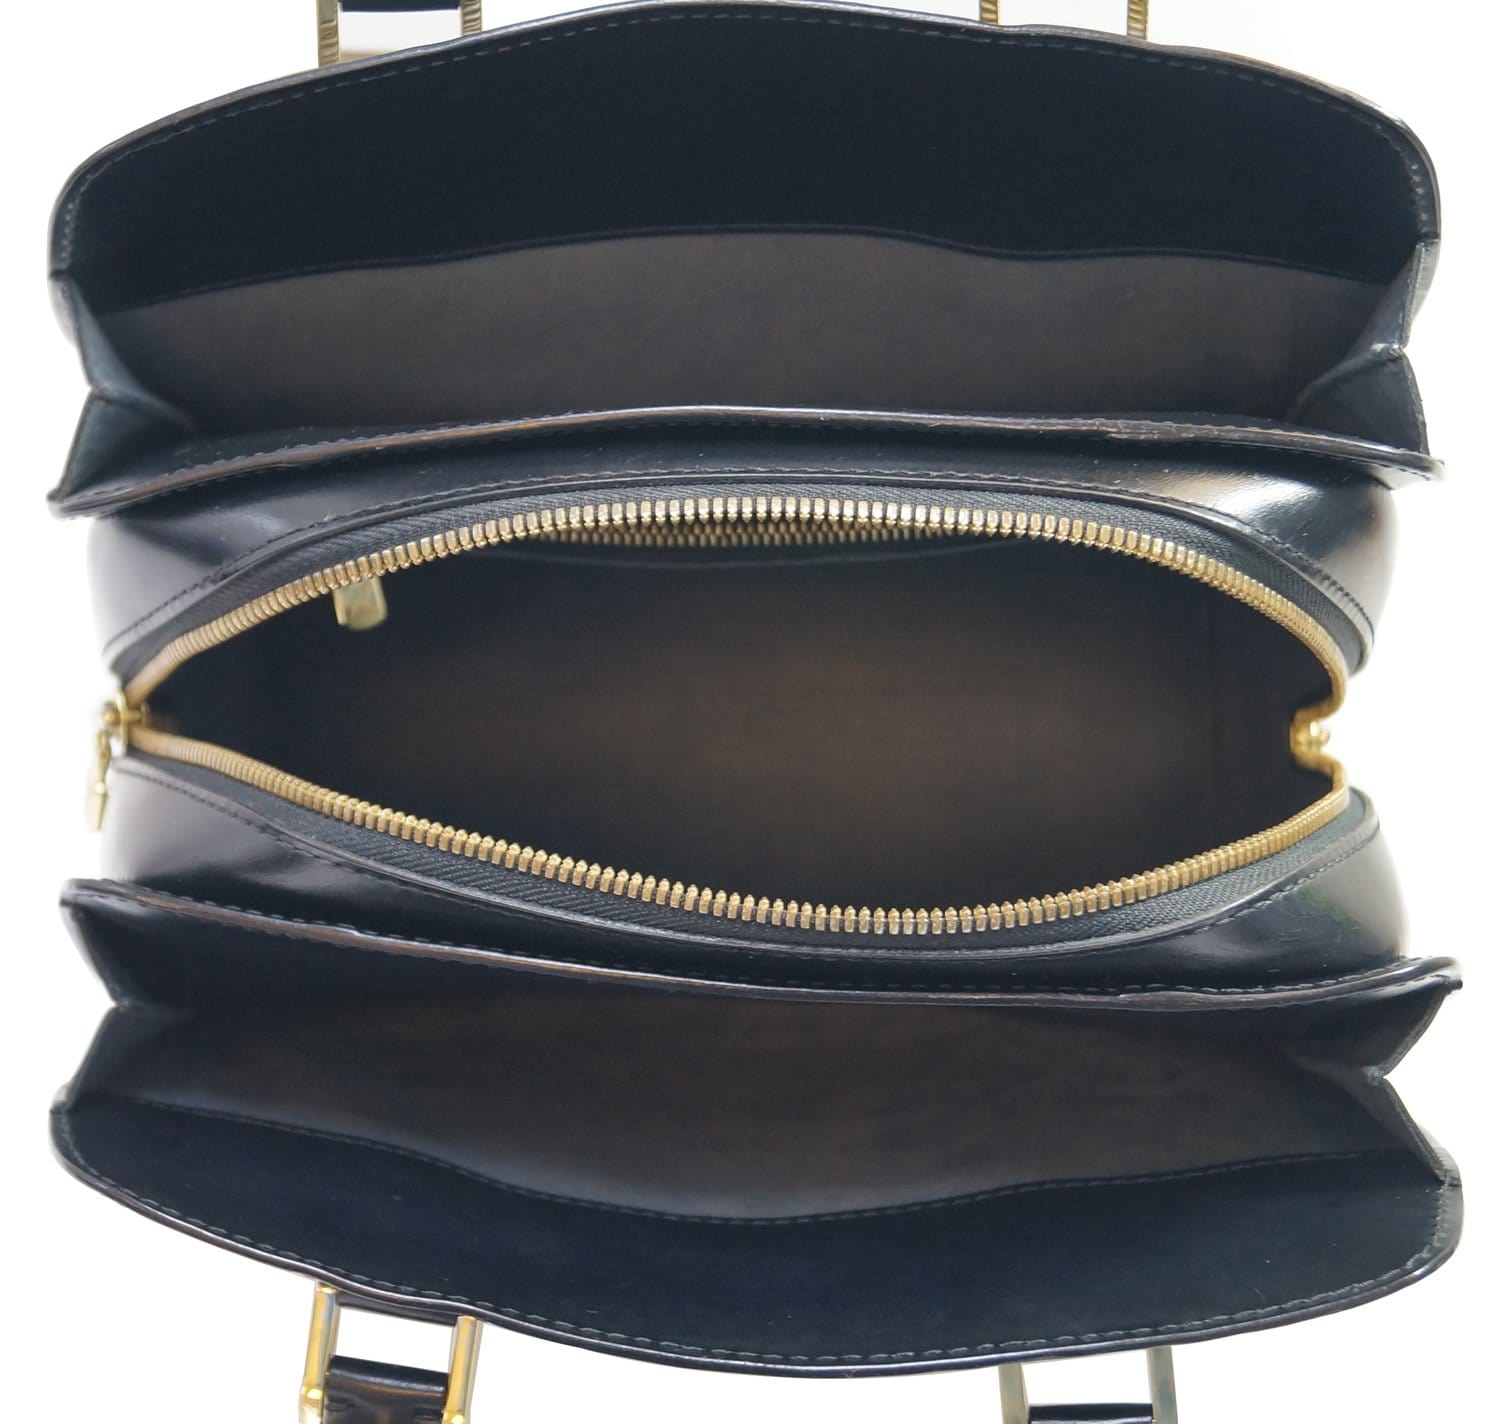 Preloved Louis Vuitton Pont Neuf PM Black Epi Leather Handbag